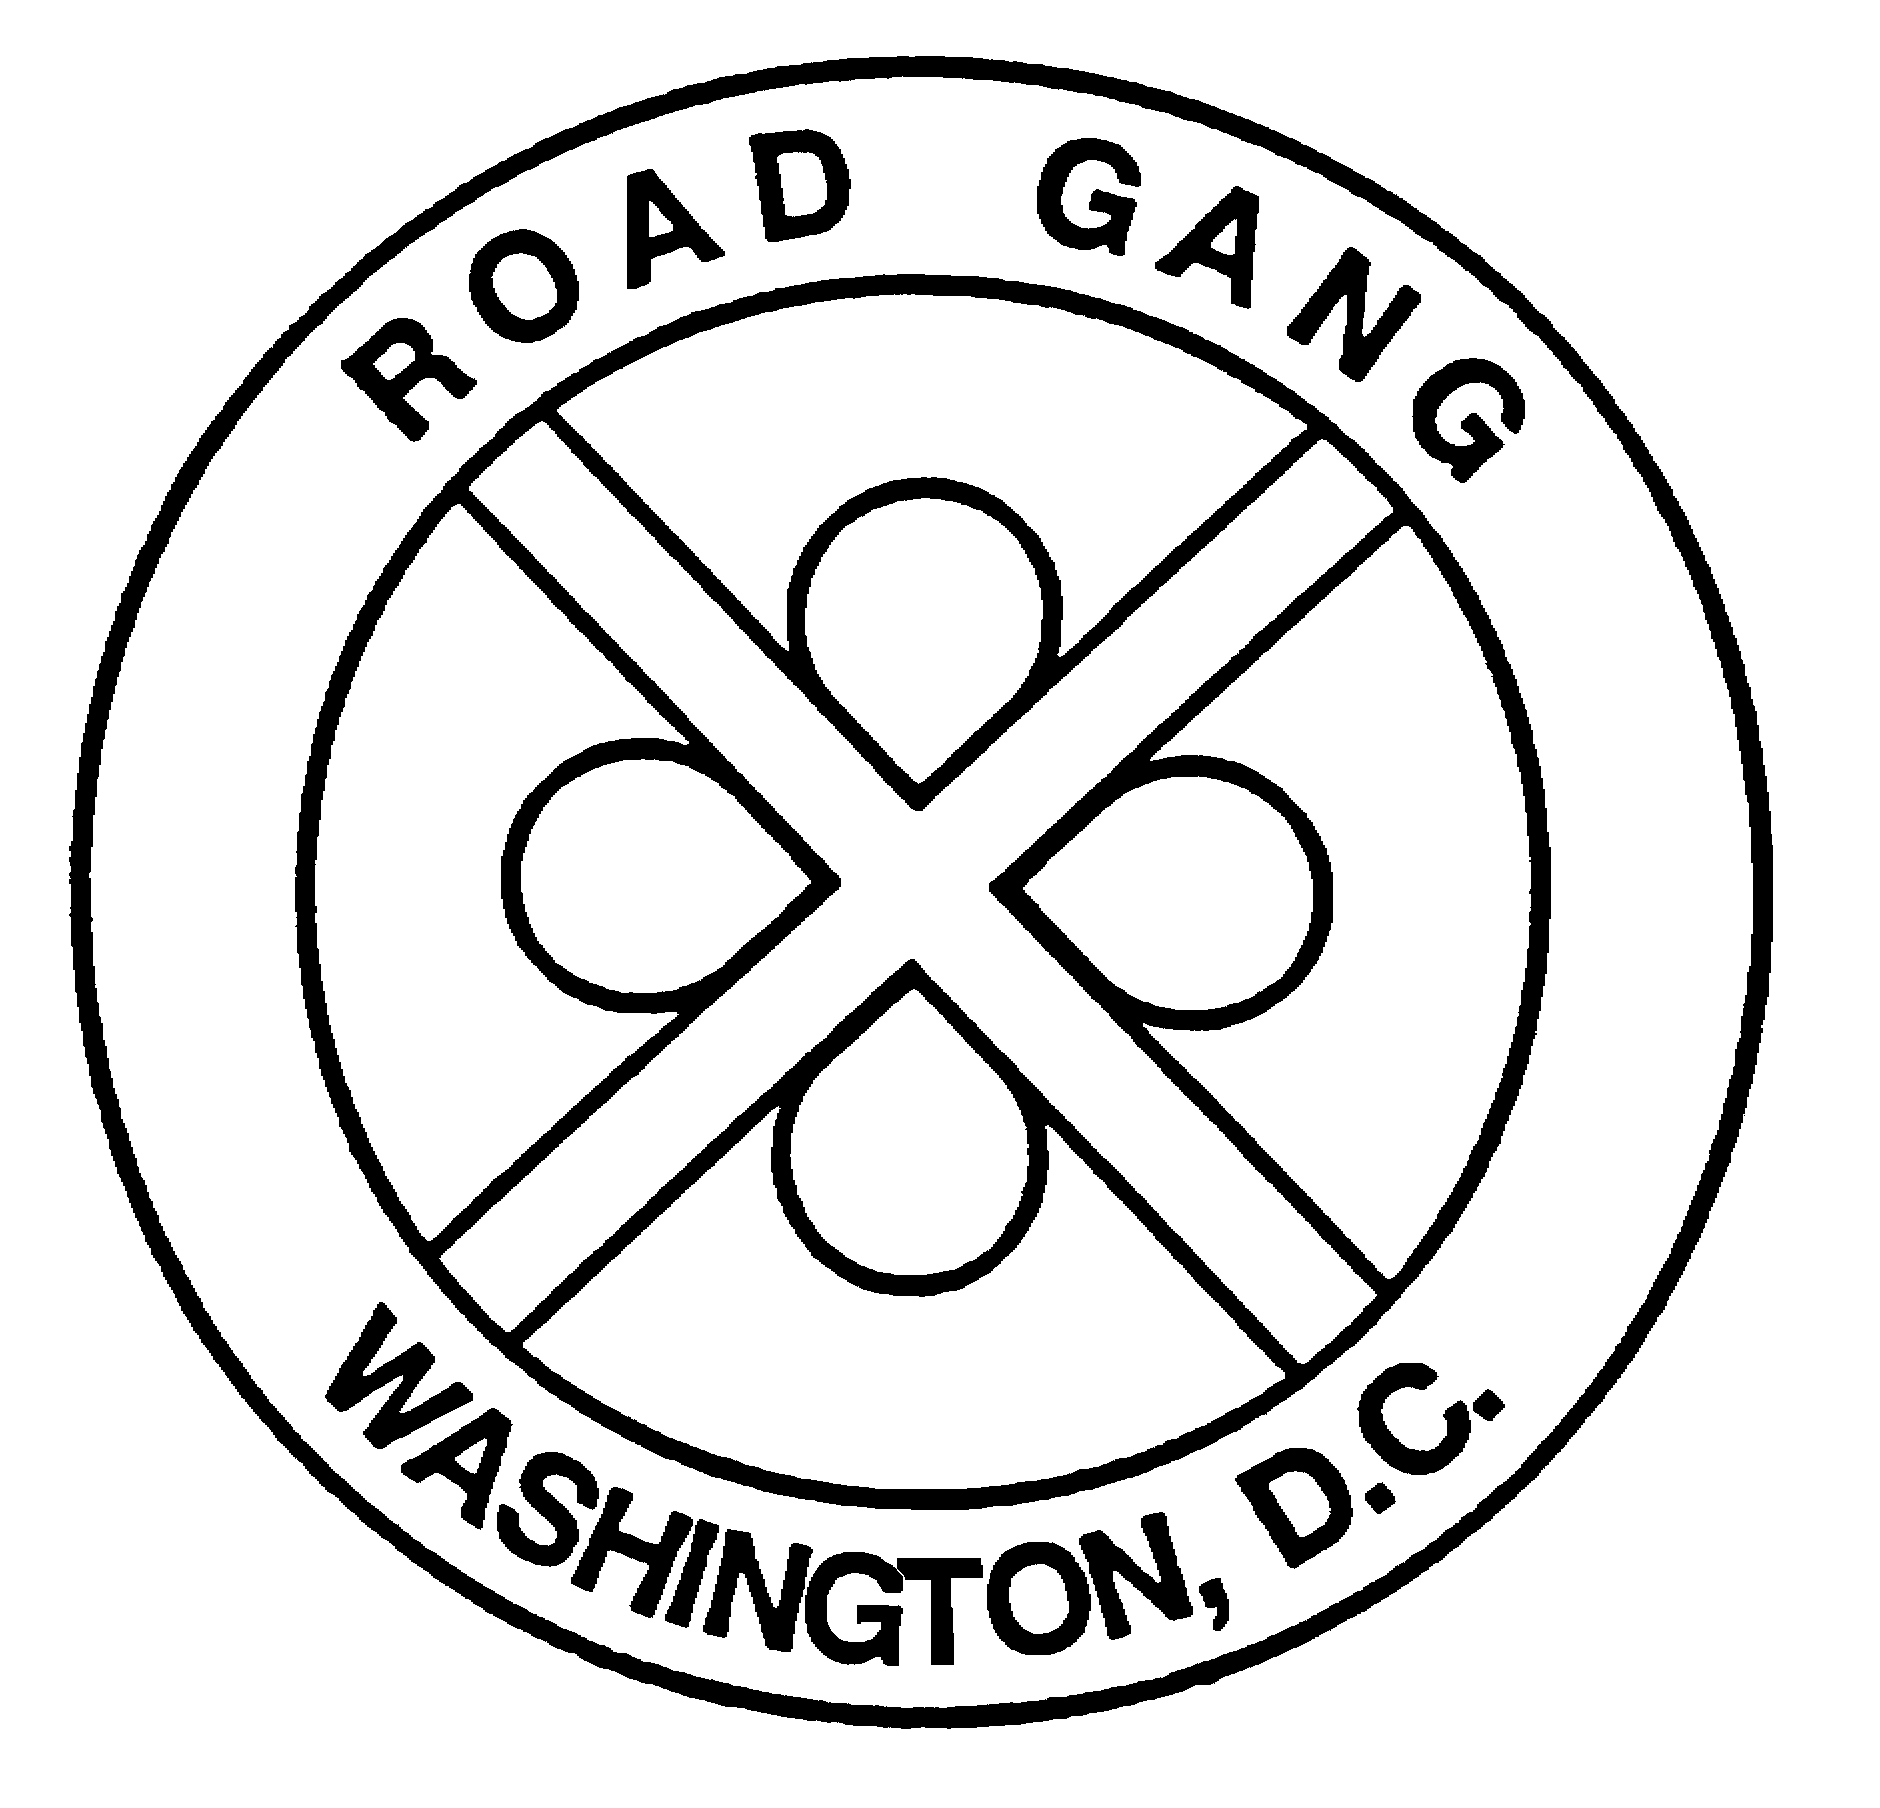 The Road Gang